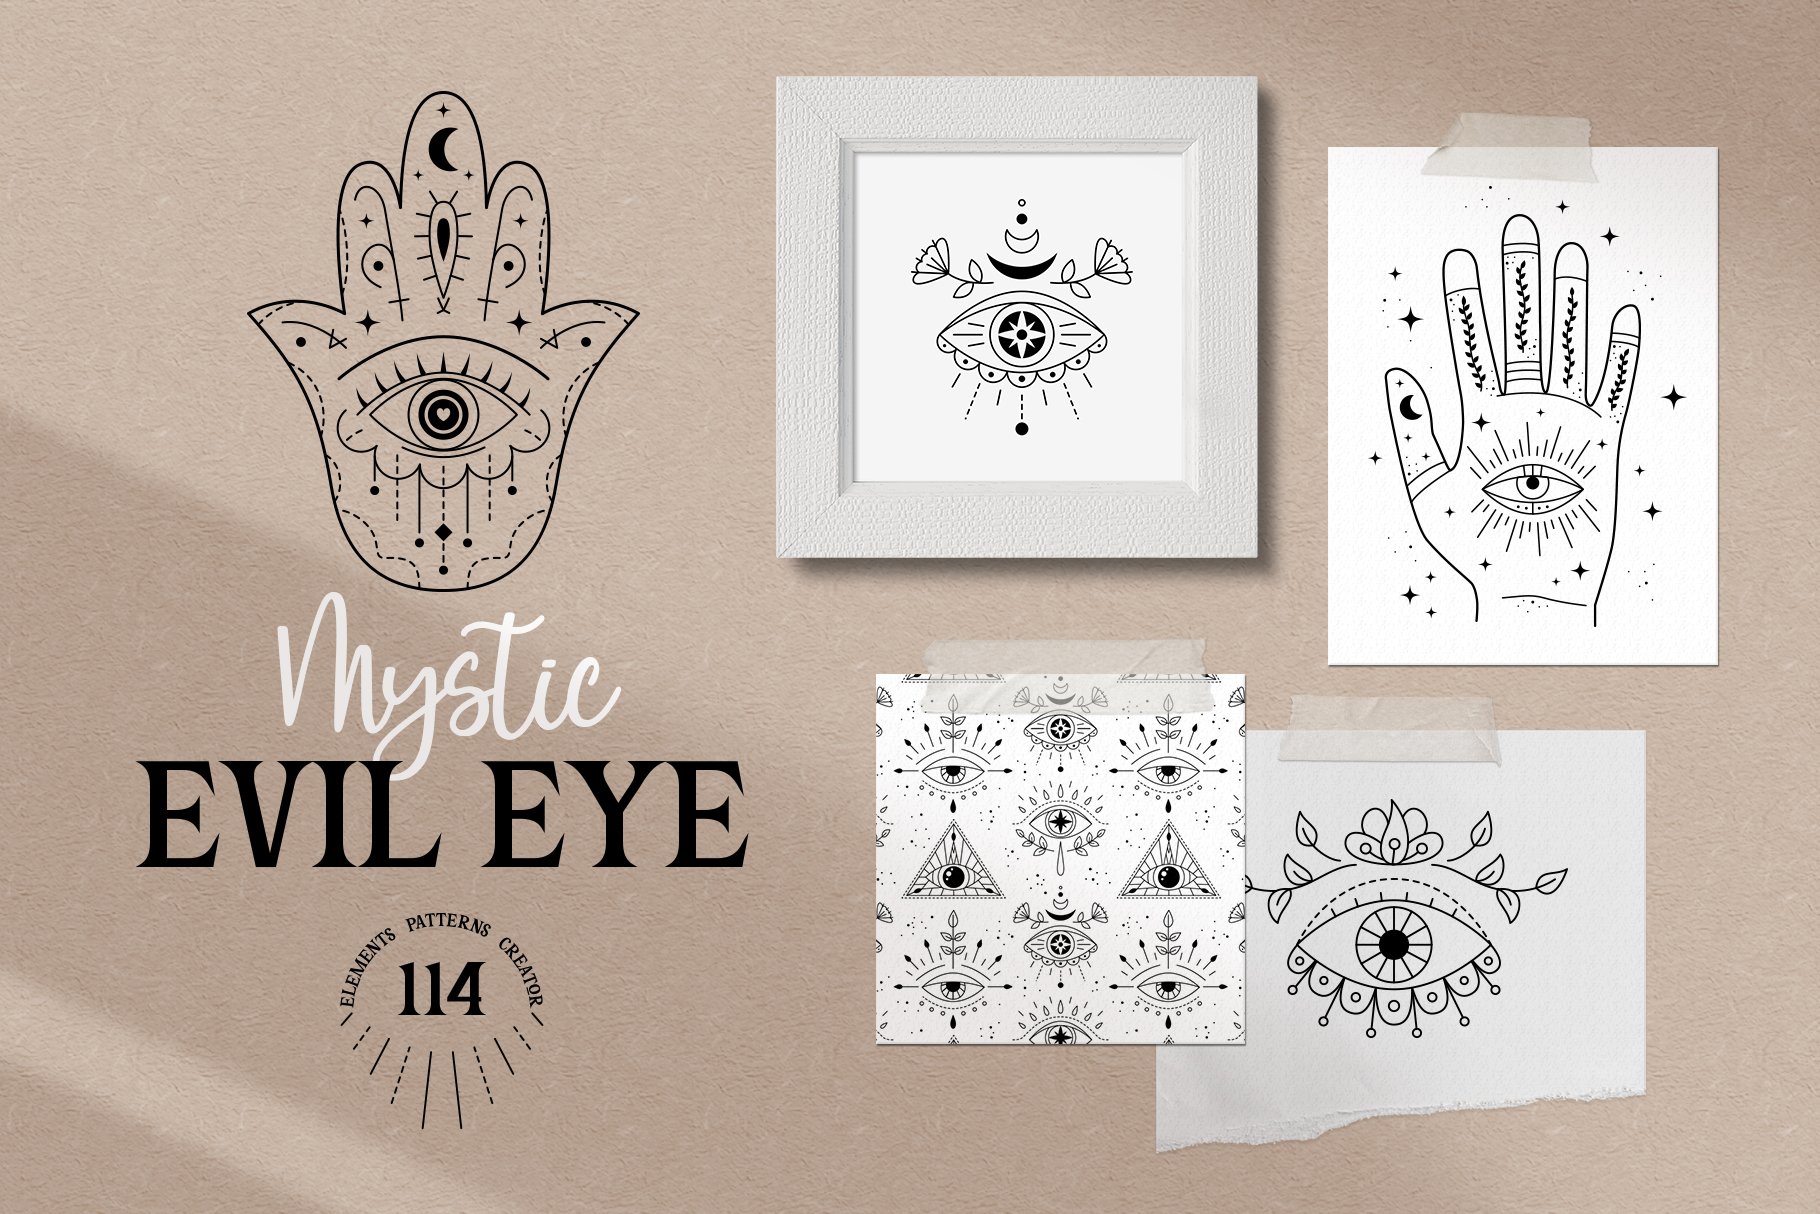 Mystic Evil Eye cover image.